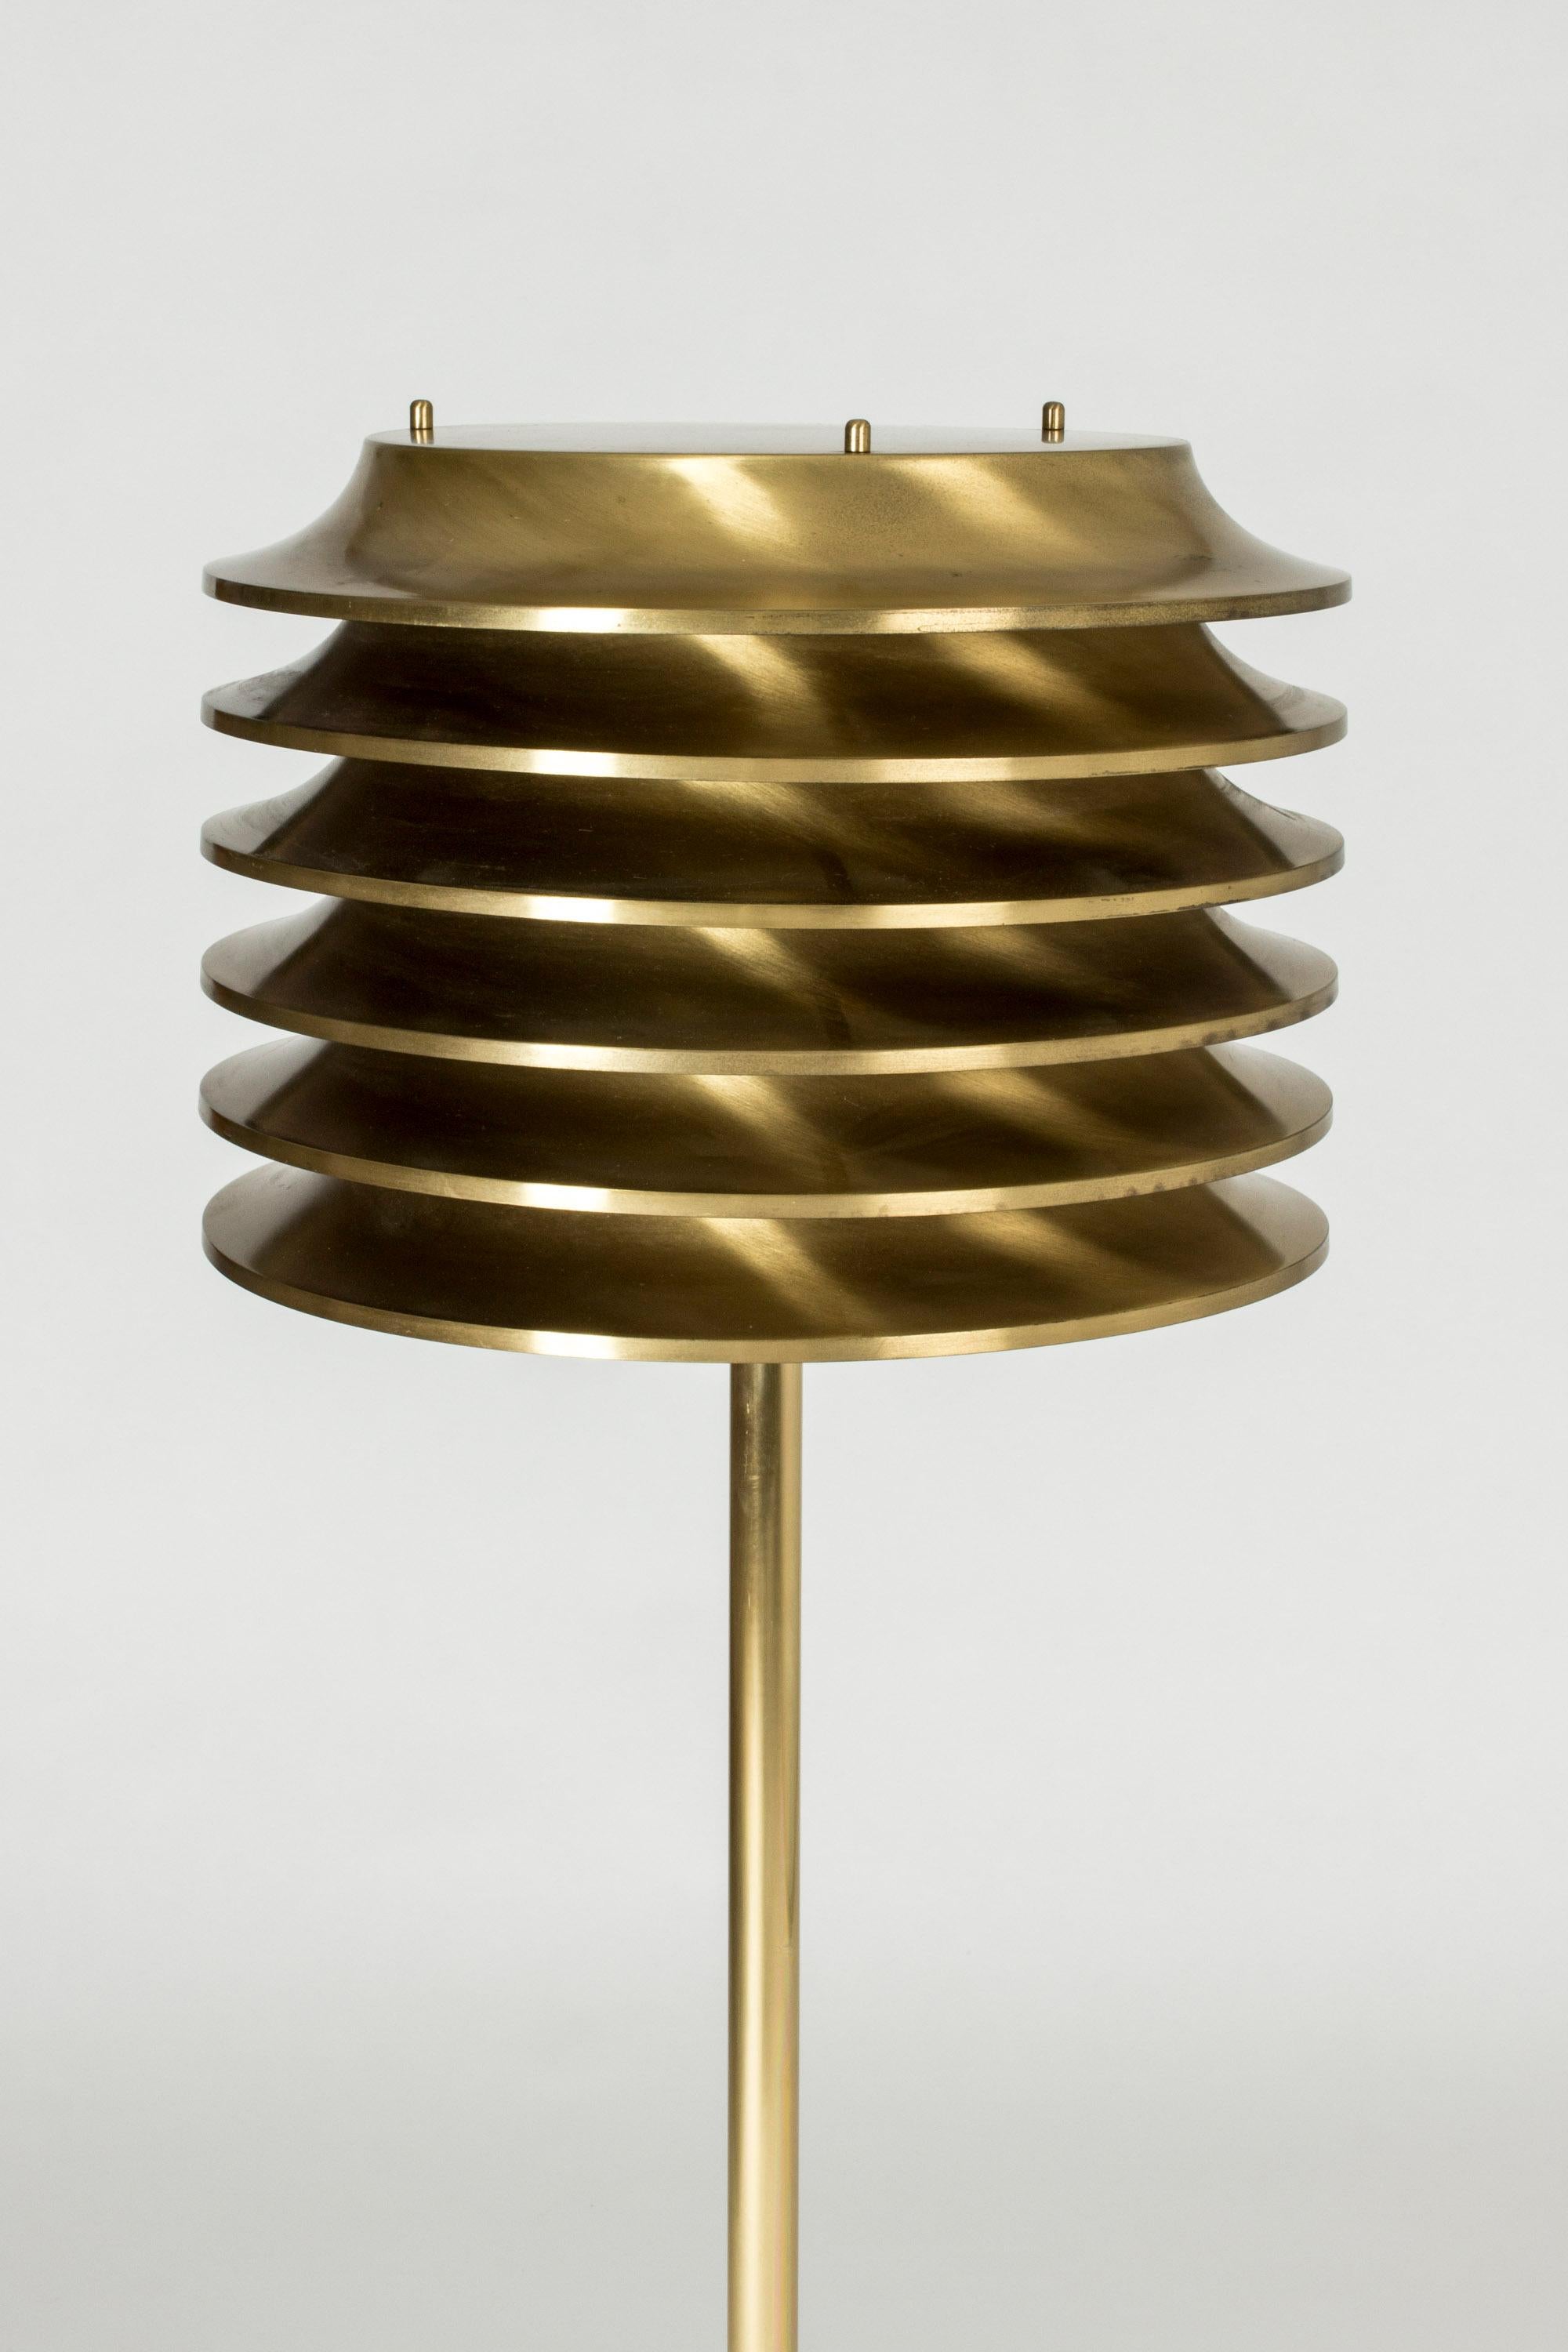 Scandinavian Modern Finnish Brass Floor Lamp by Kai Ruokonen for Orno, 1970s